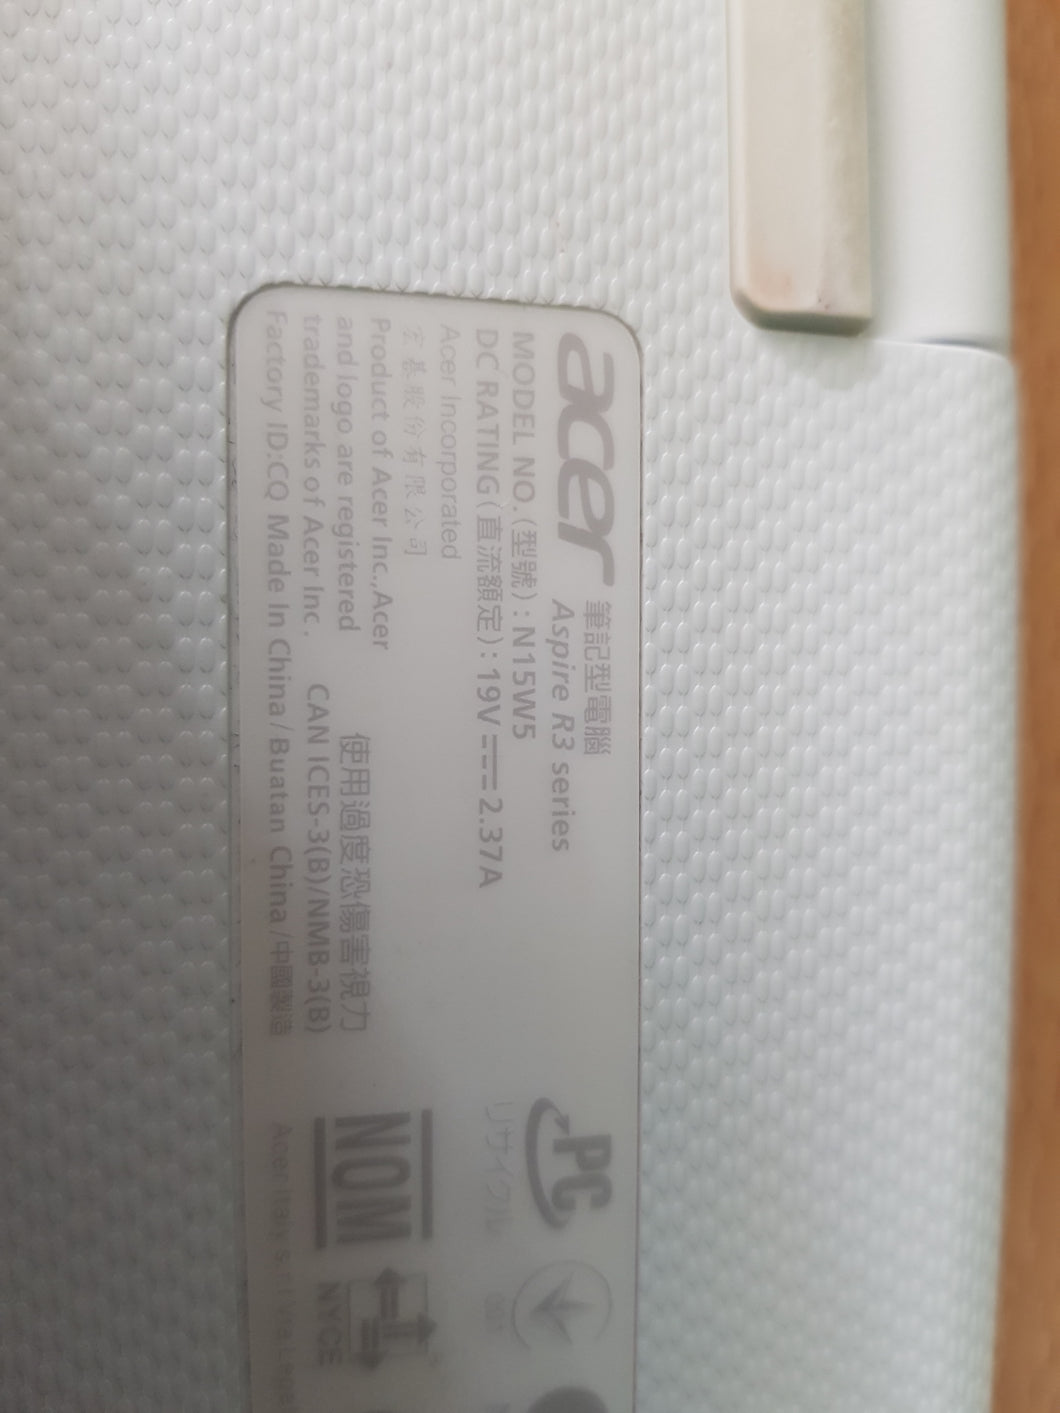 Acer Aspire R3-131T laptop 9 months warranty